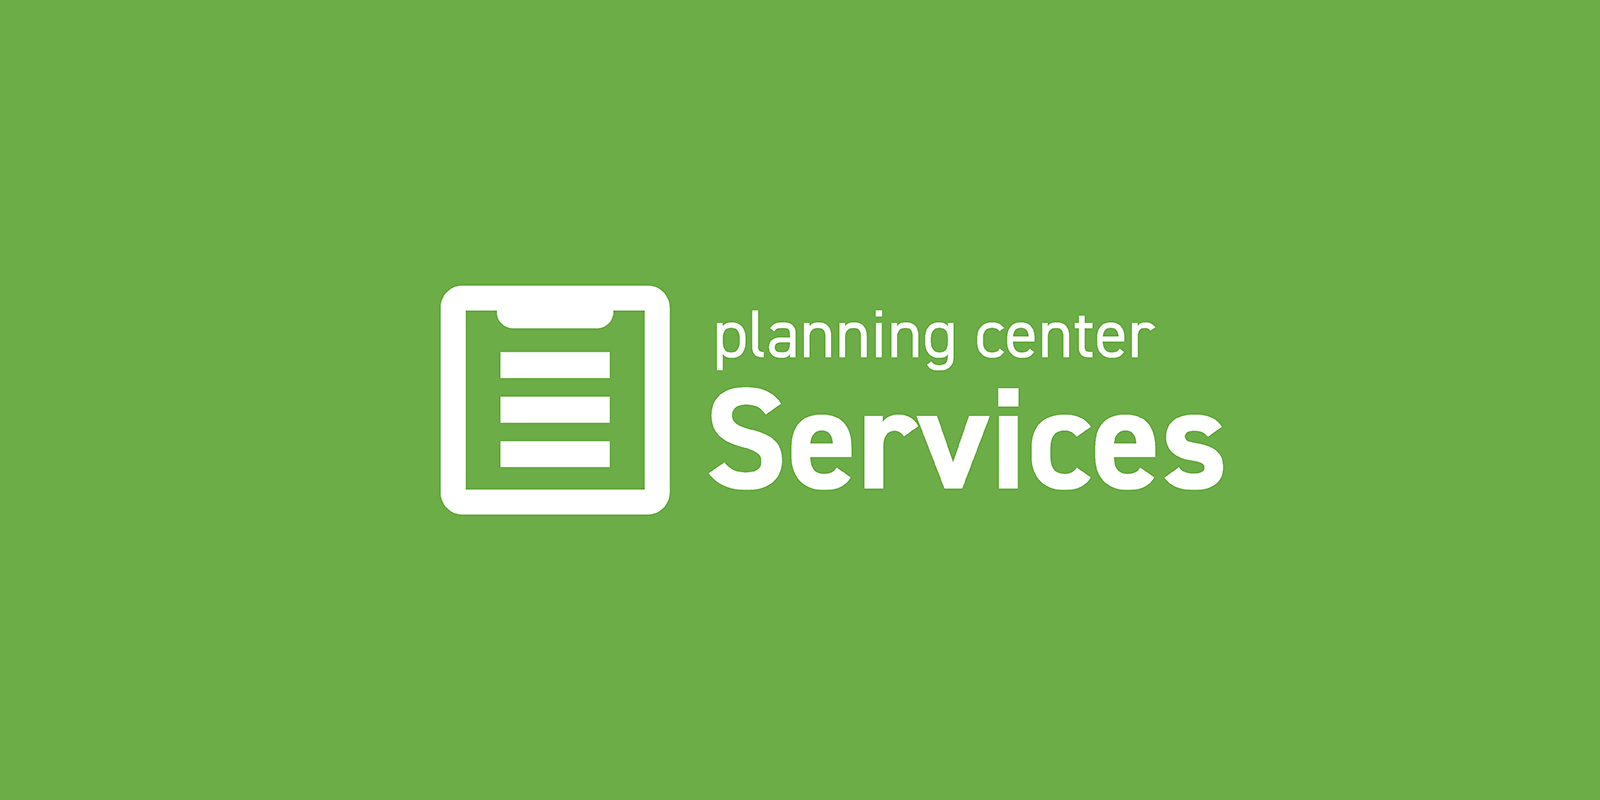 Central planning. Planning Center. Teamcenter логотип.